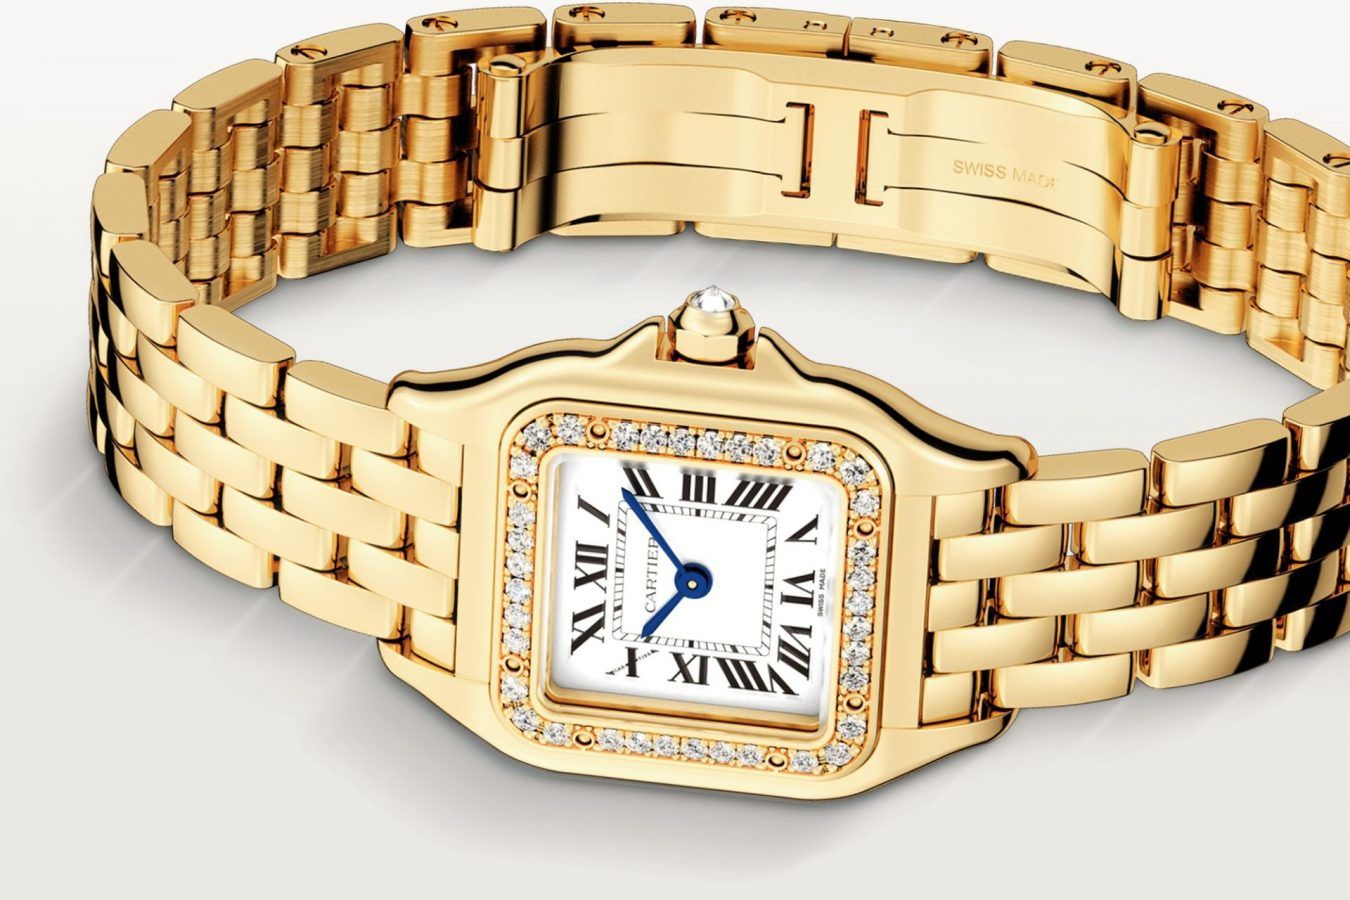 What makes the Panthère de Cartier watch so enduring